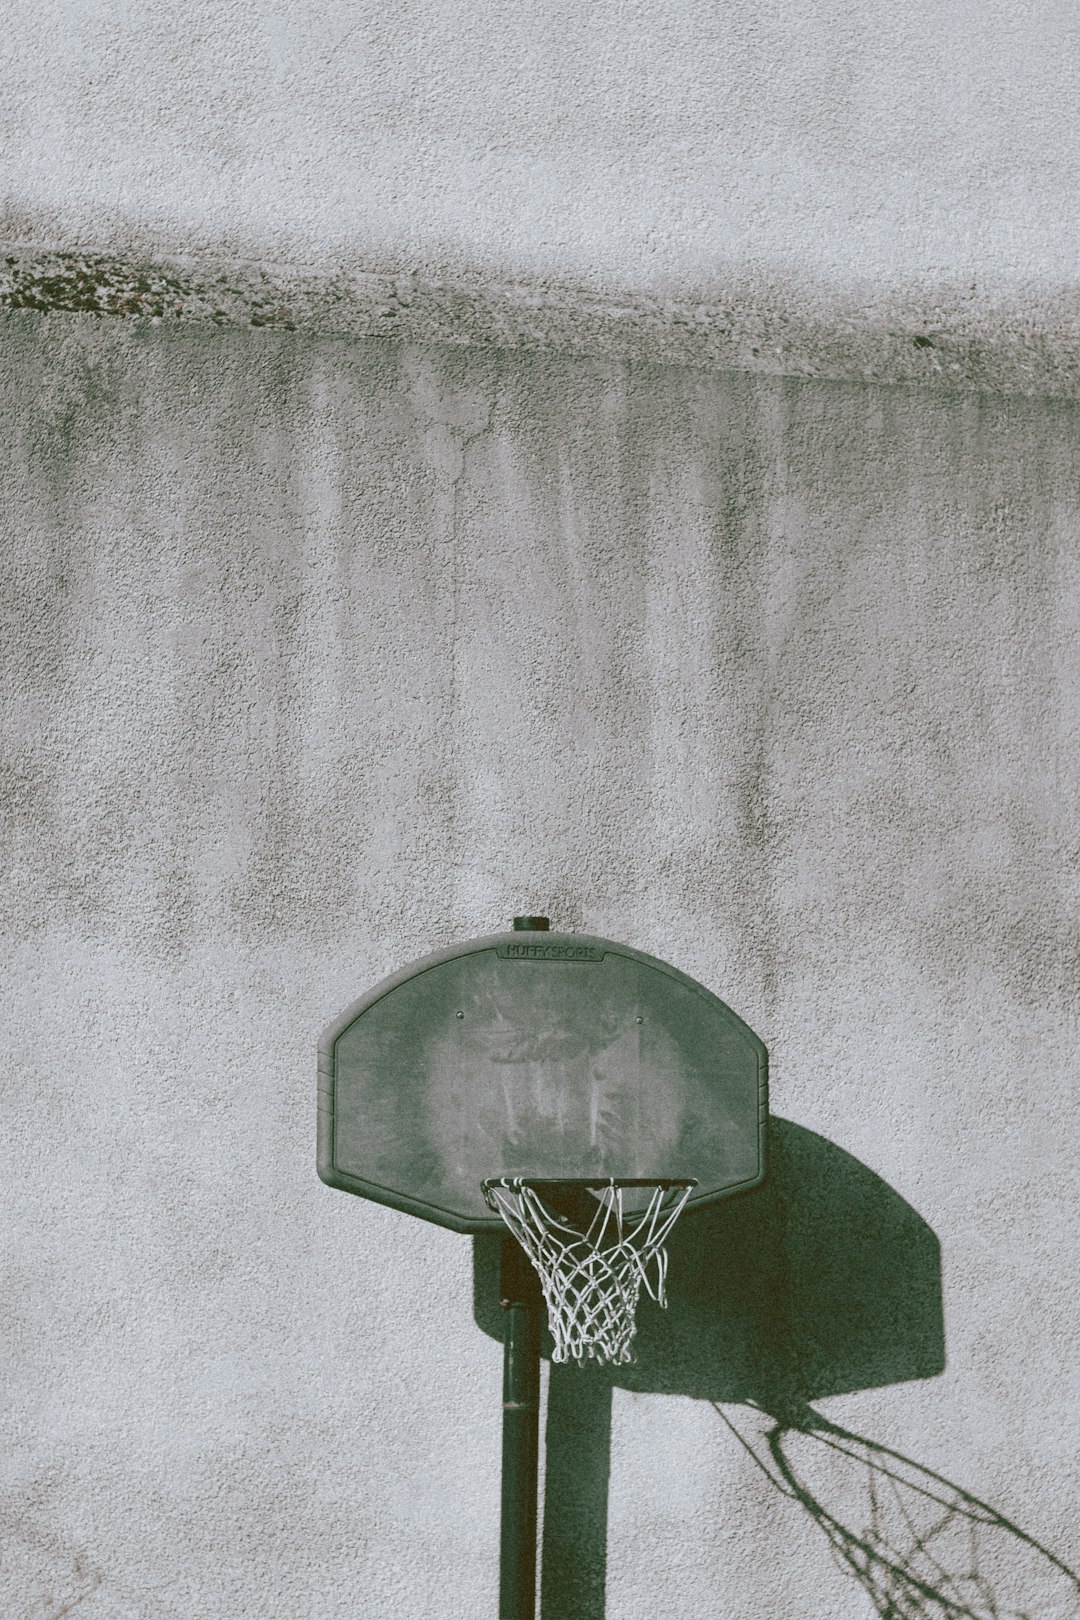 black and white basketball hoop